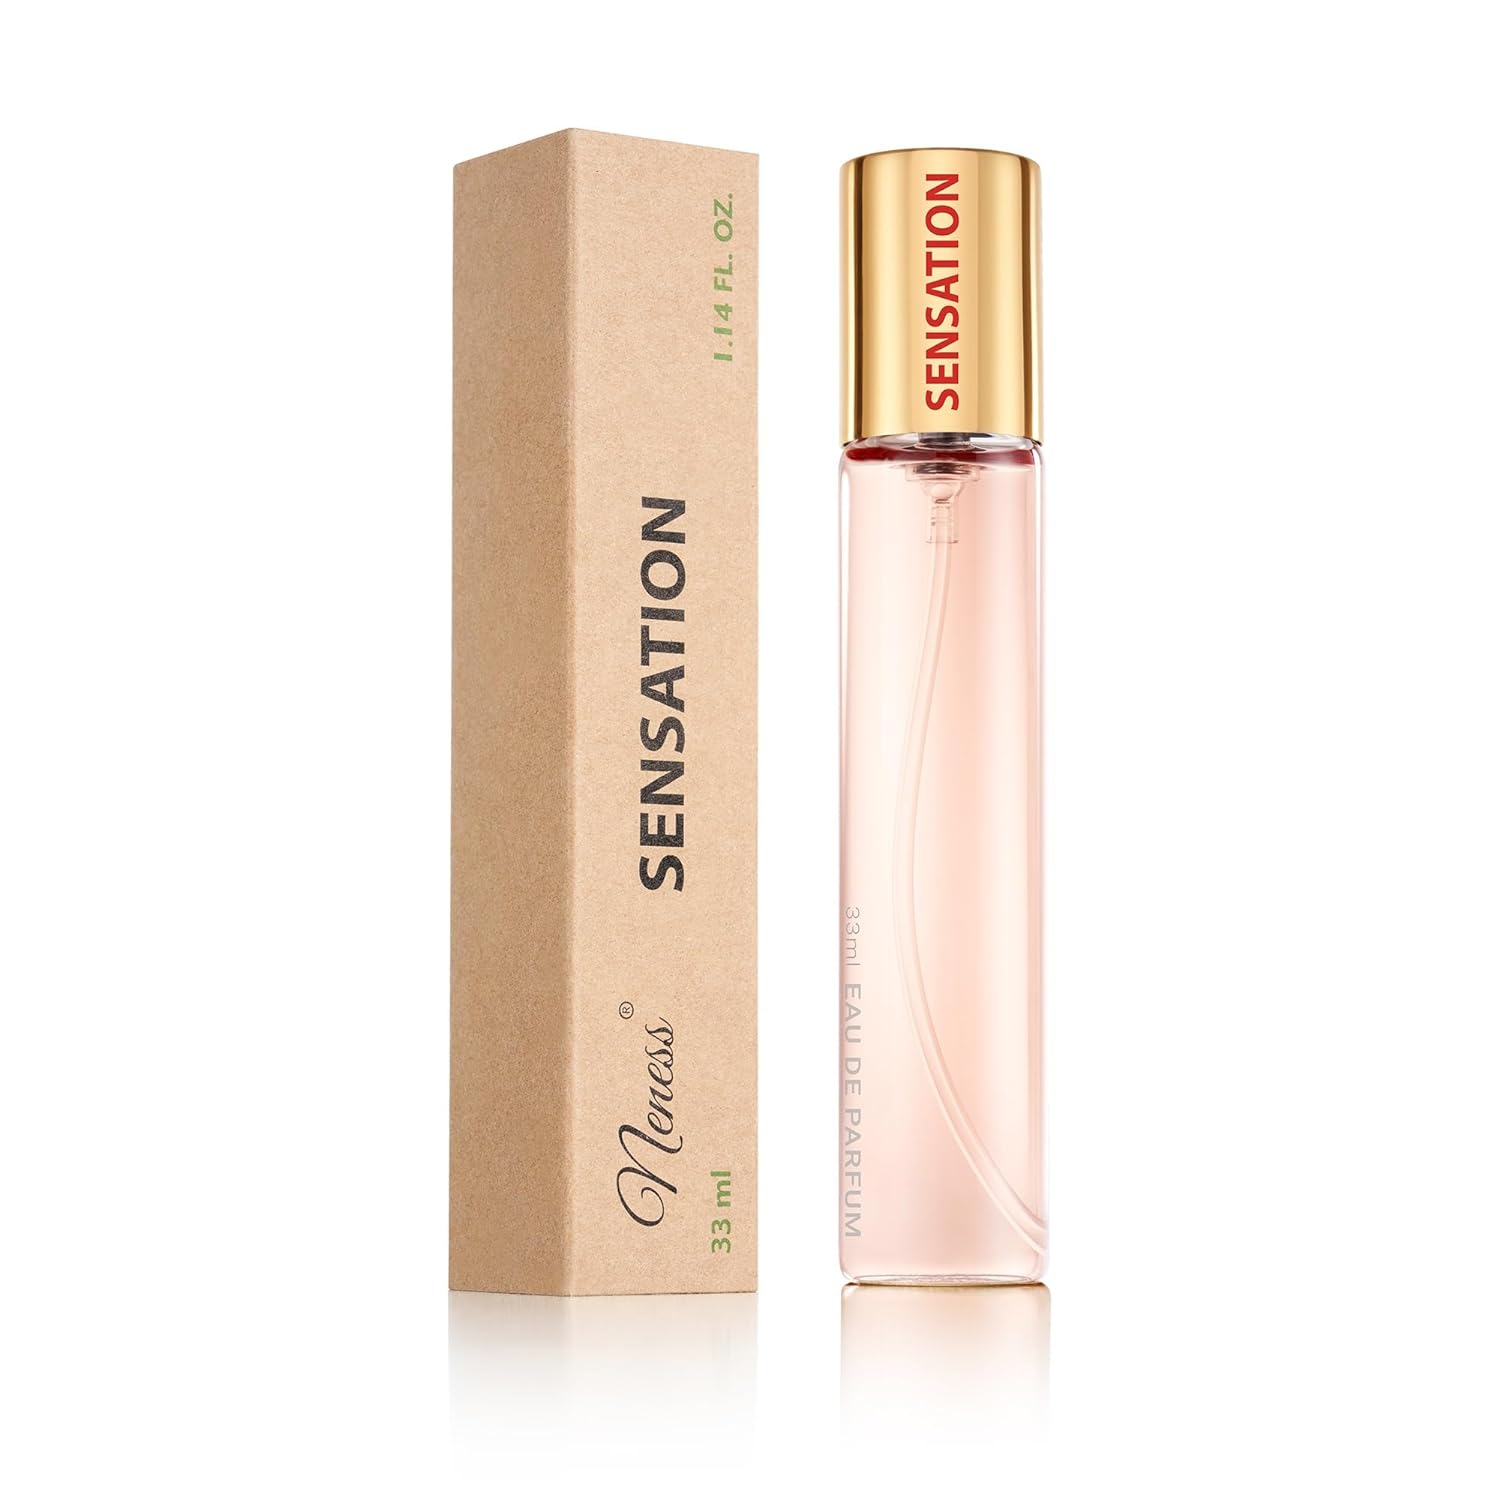 Neness Scandalouse Women\'s Perfume, Eau de Parfum, Bold and Feminine Fragrance for Any Occasion, 33 ml